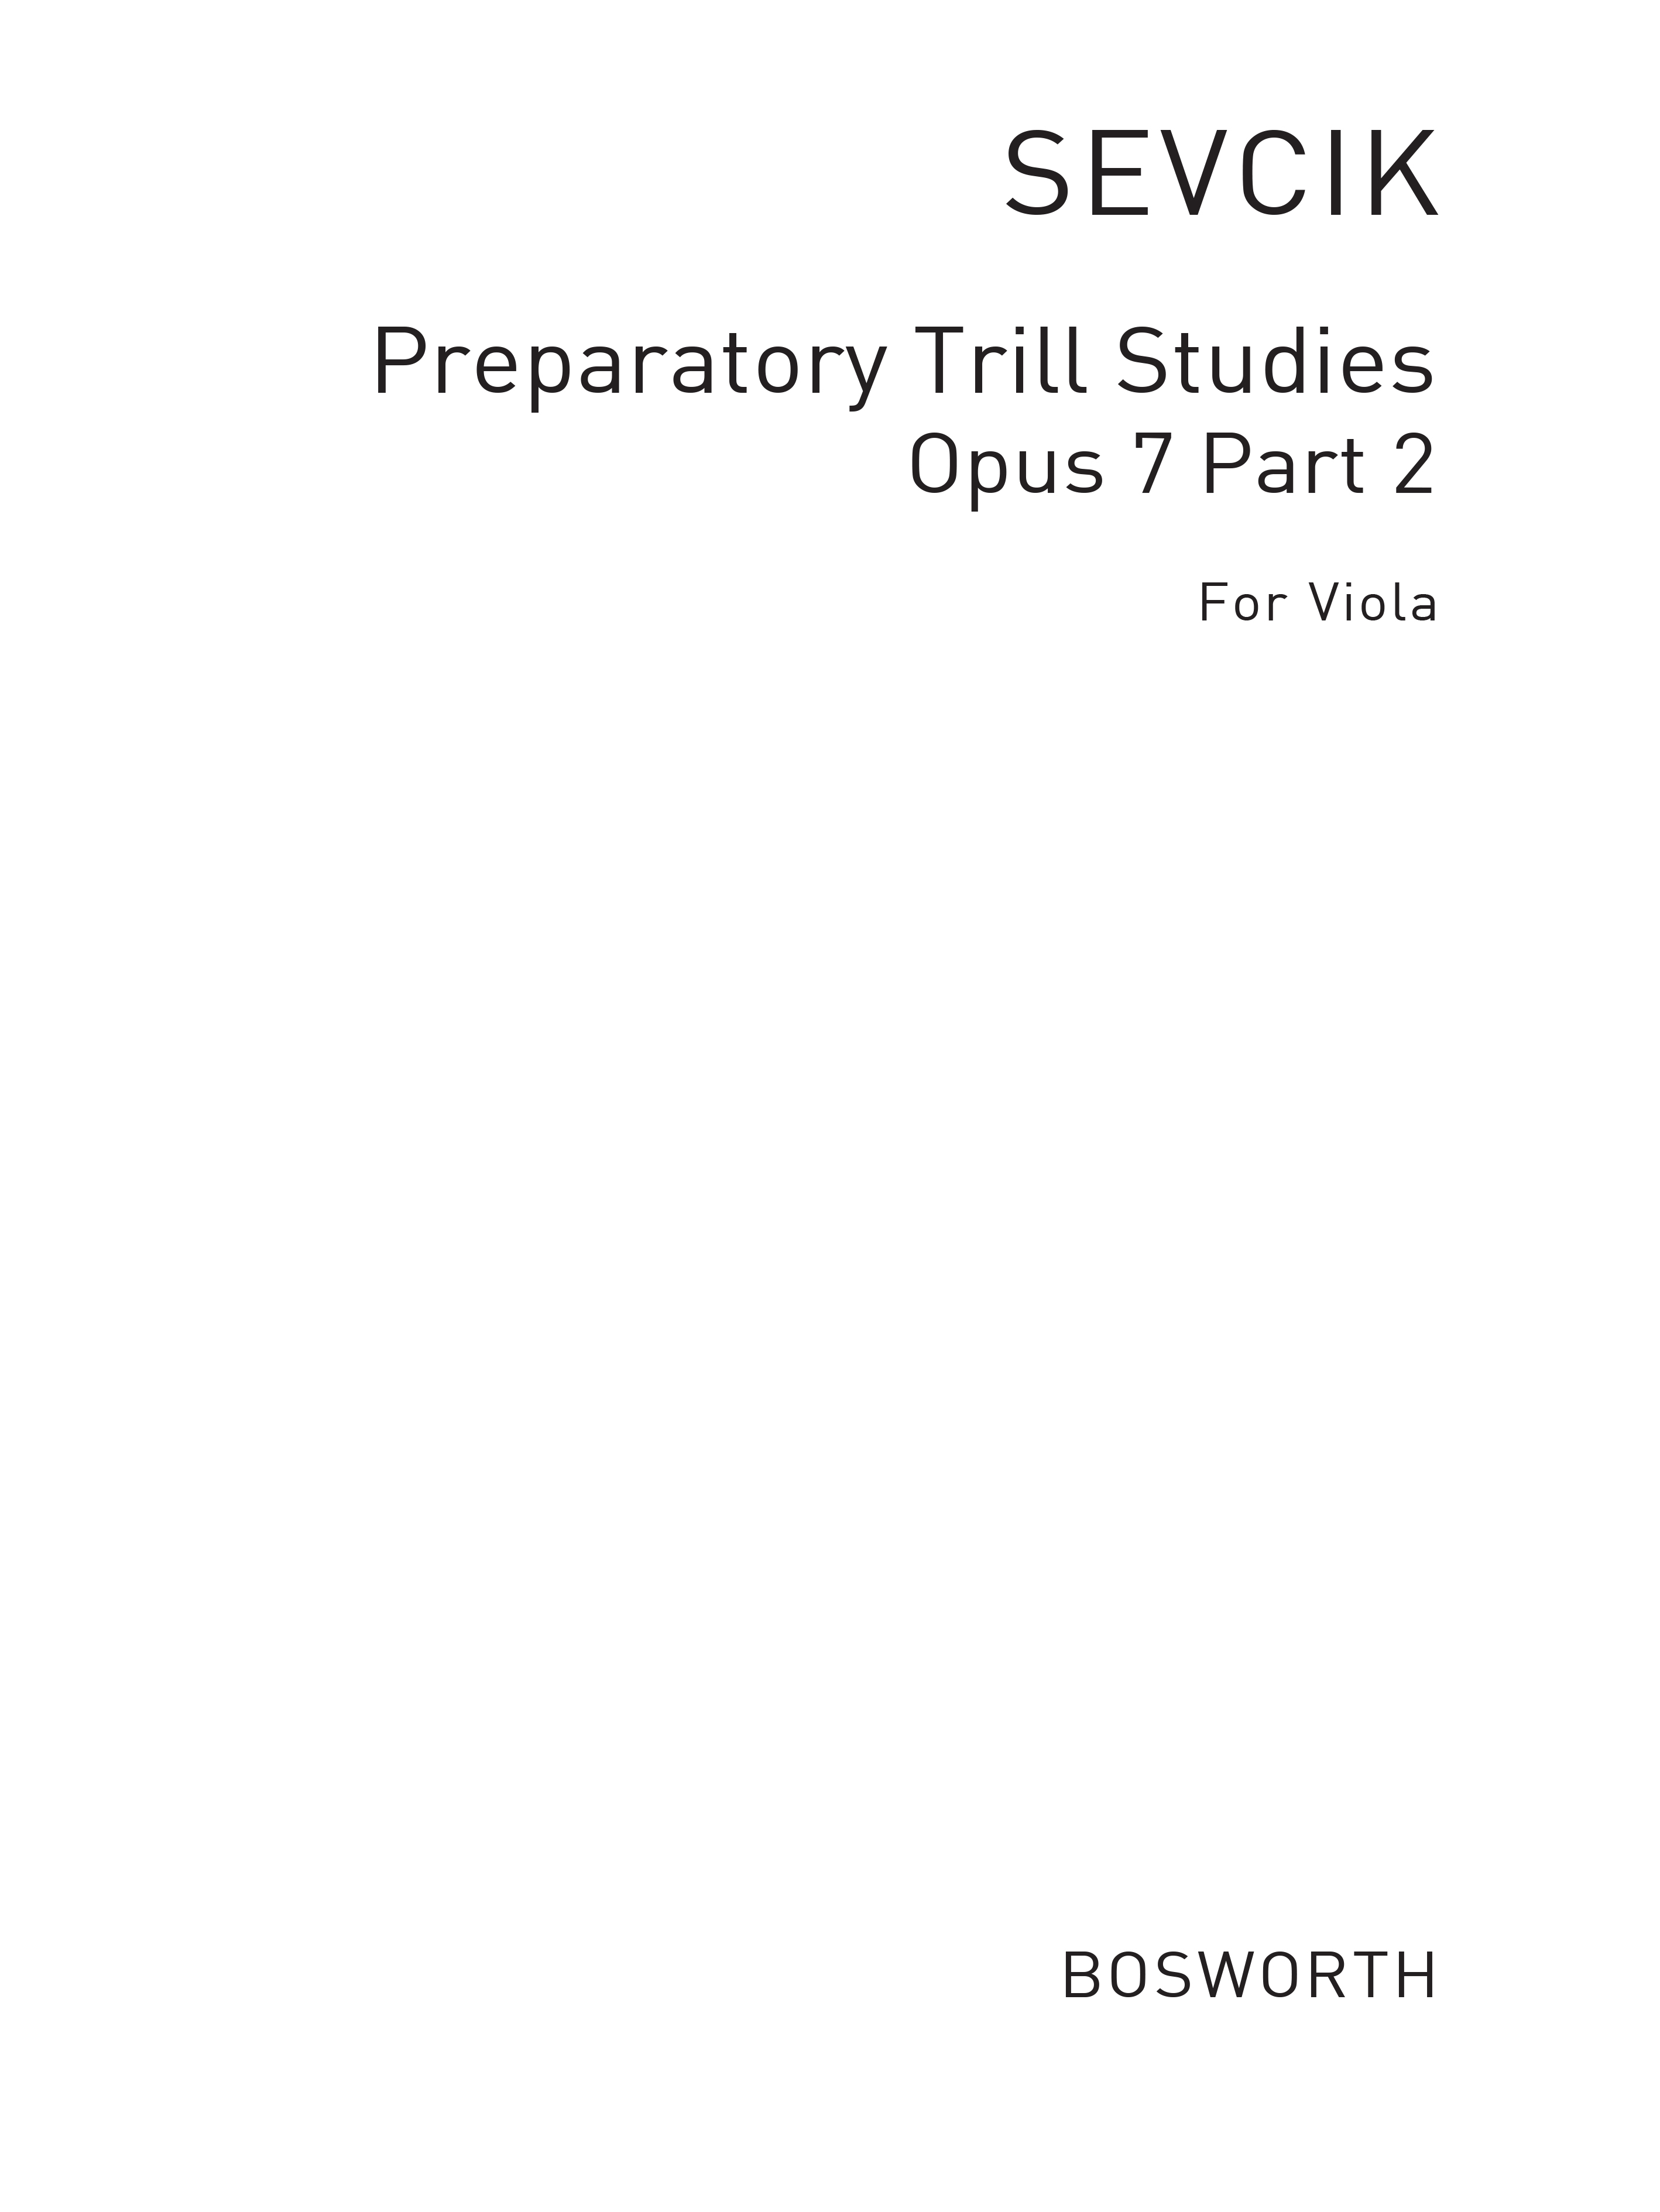 Sevcik Viola Studies: Preparatory Trill Studies Part 2